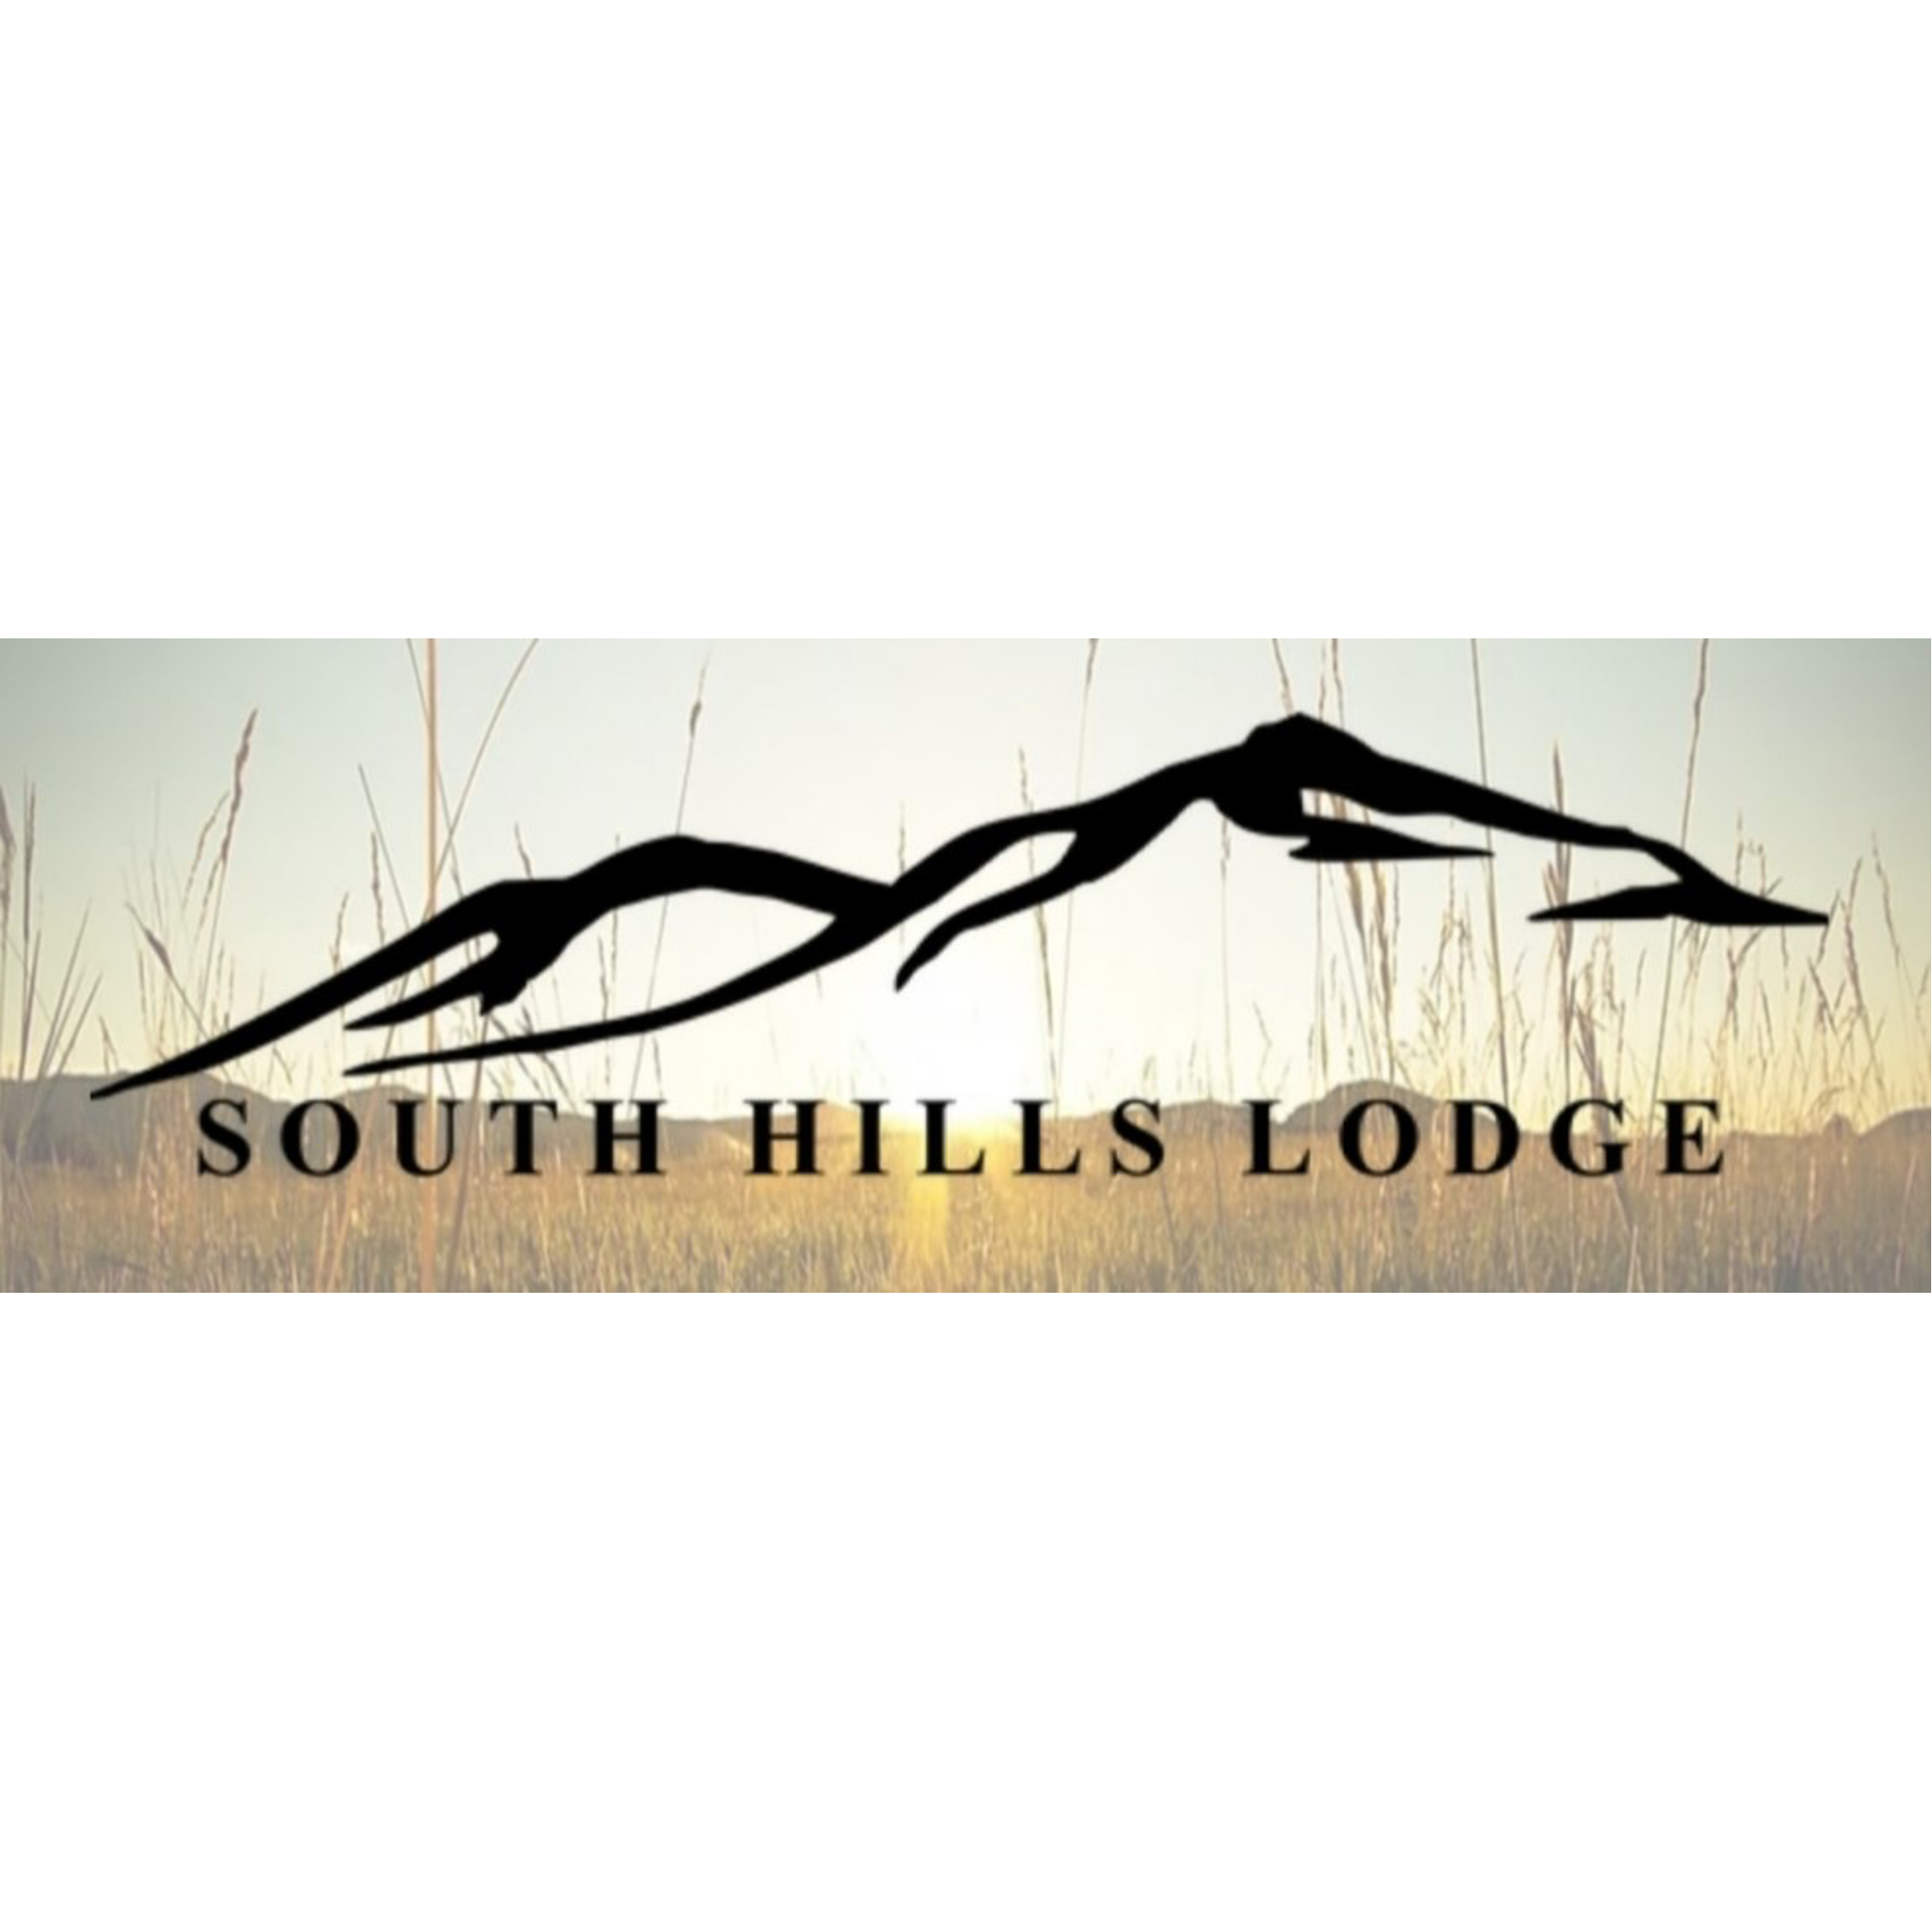 South Hills Lodge